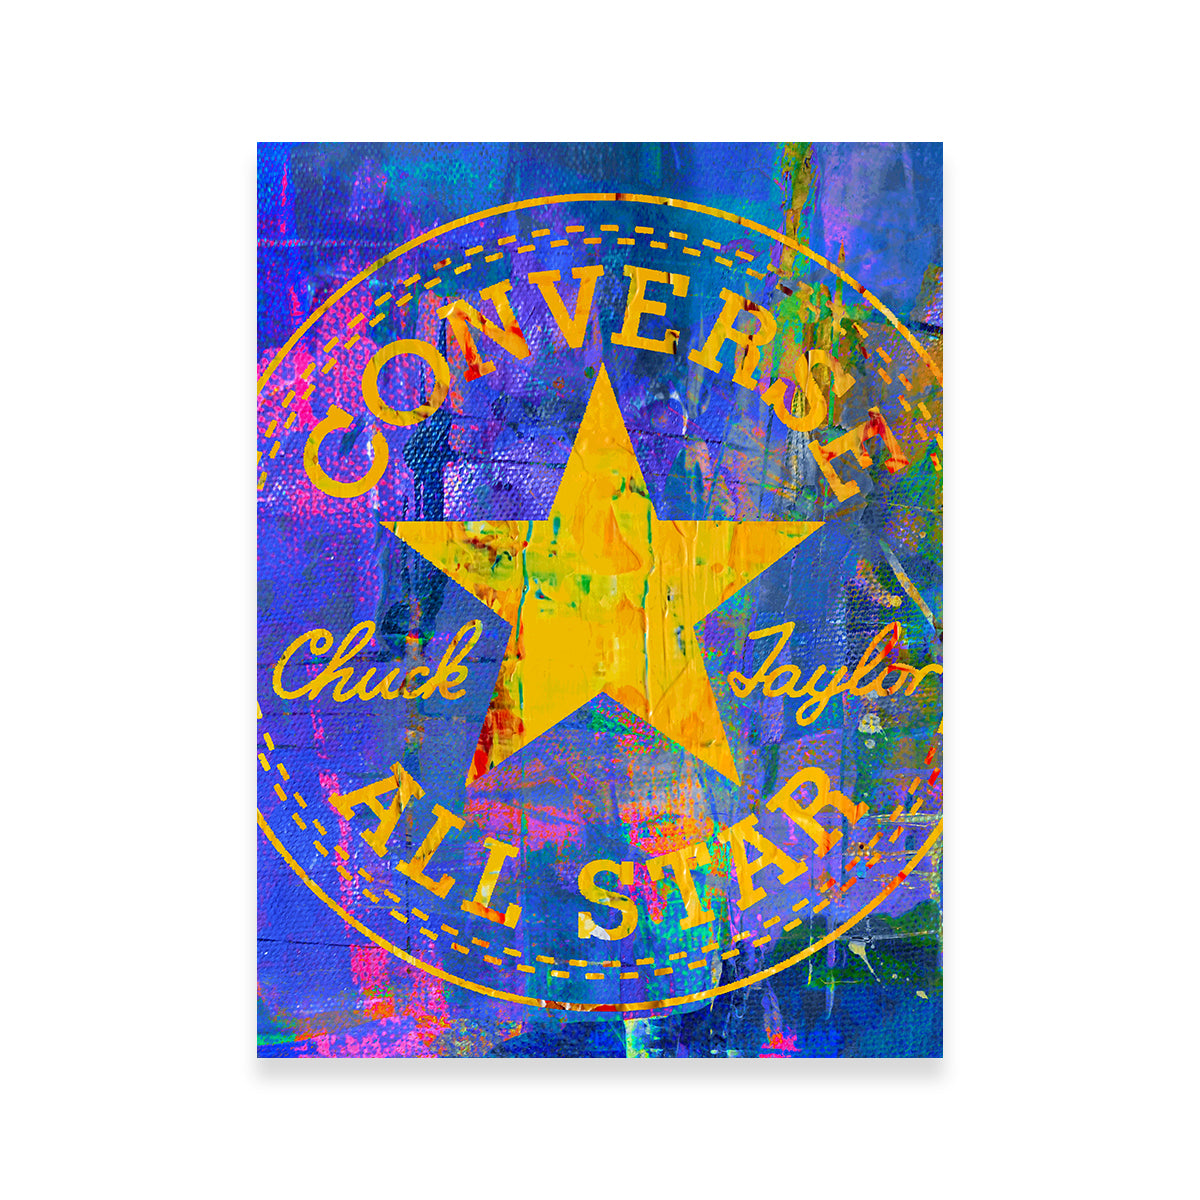 All Star Converse